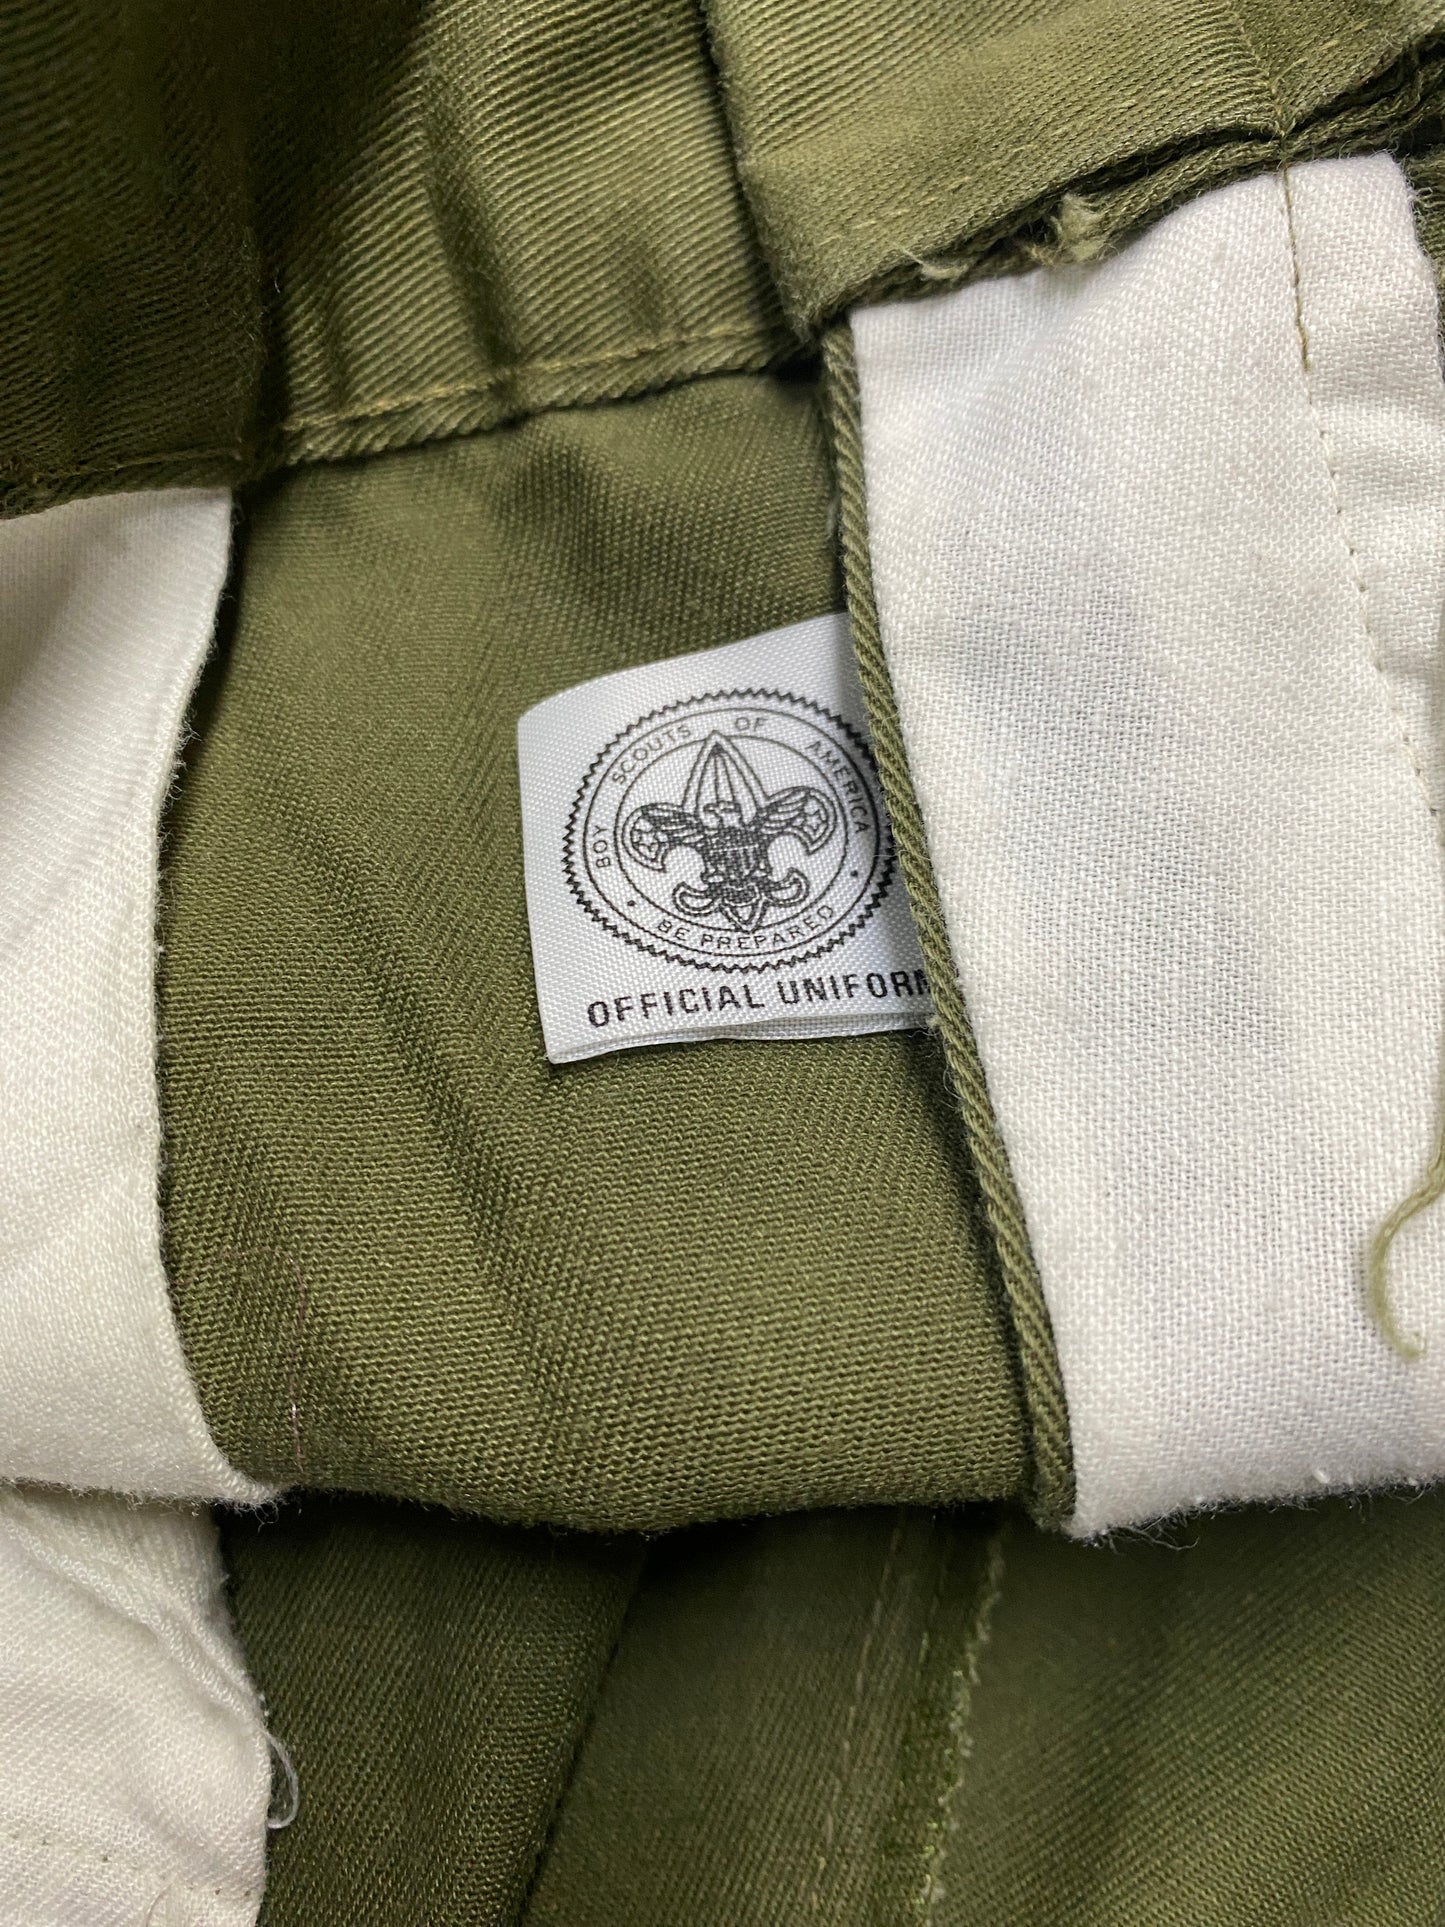 Load image into Gallery viewer, VTG Green Boy Scout Uniform Pants Sz 37x30
